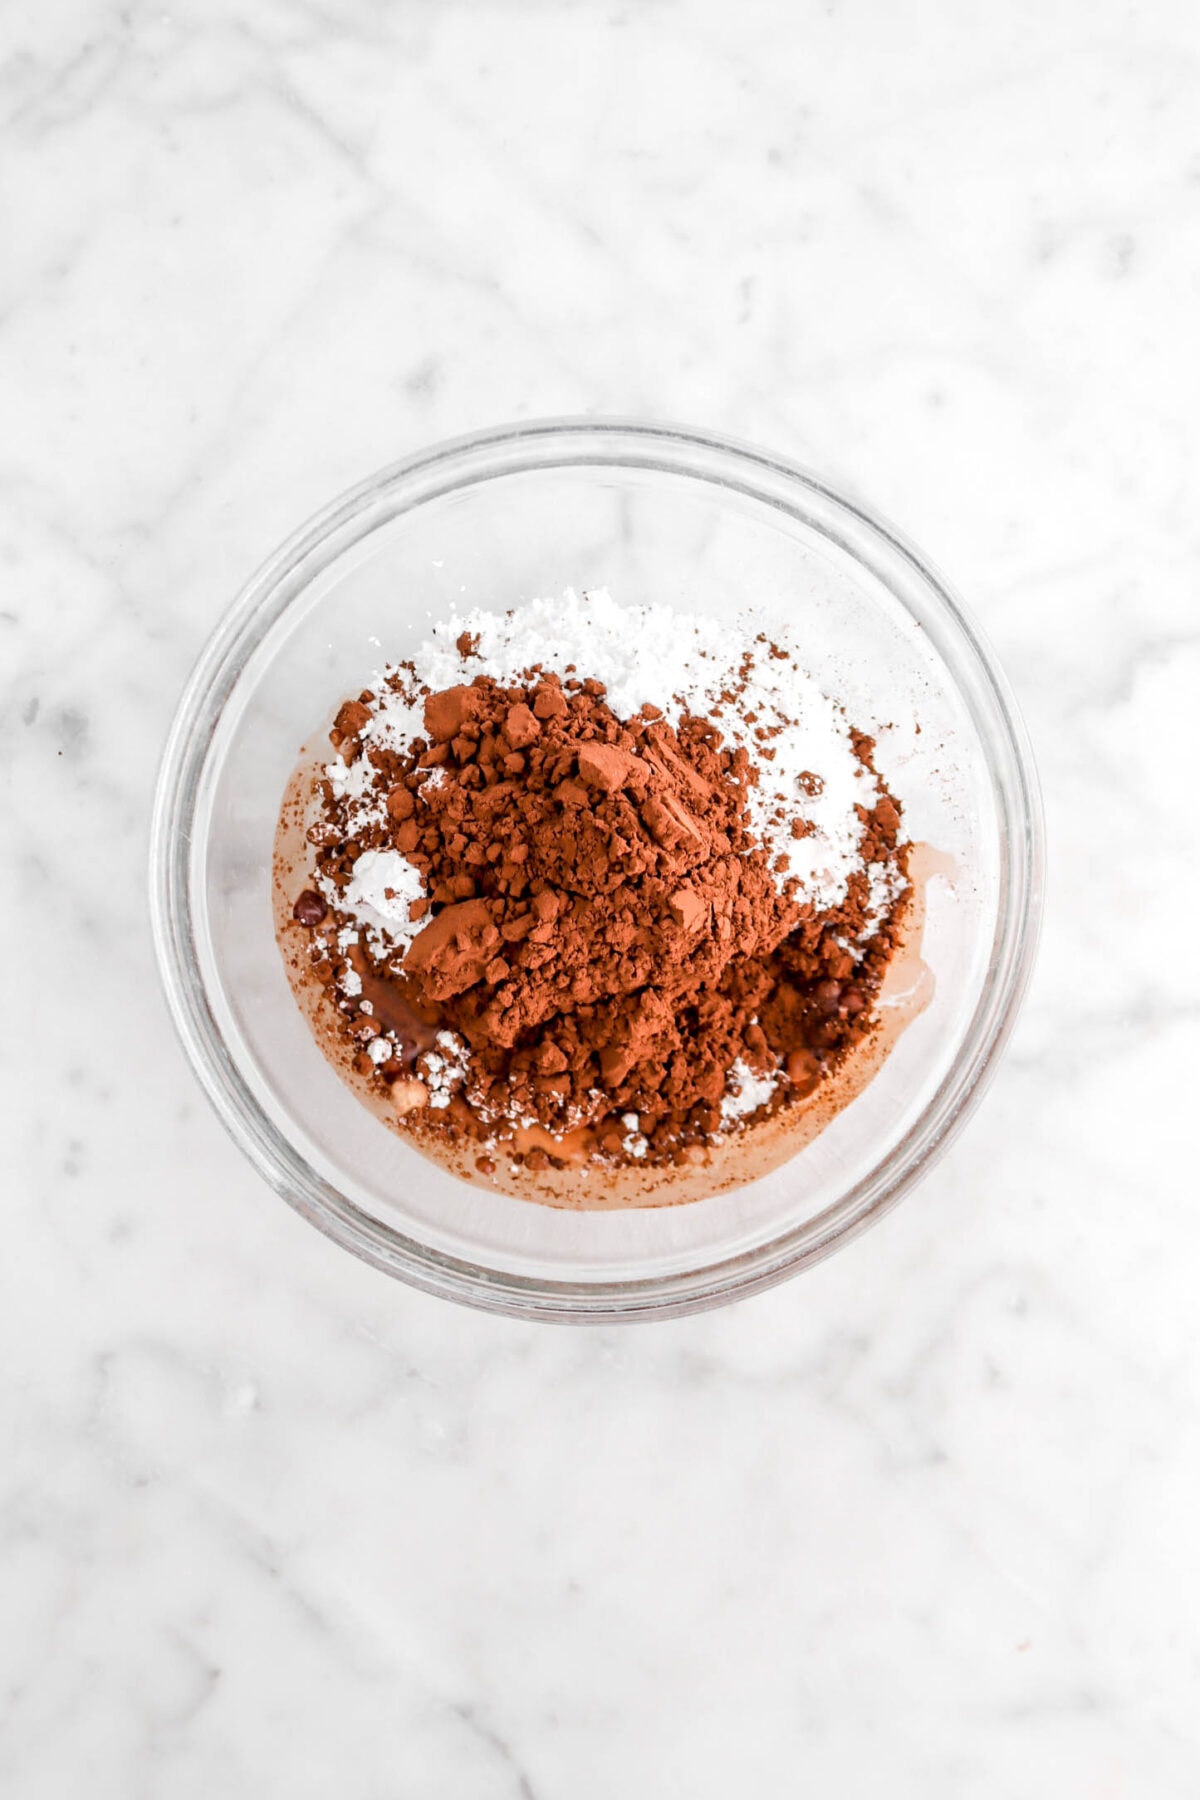 cocoa powder, milk, and powdered sugar in glass bowl